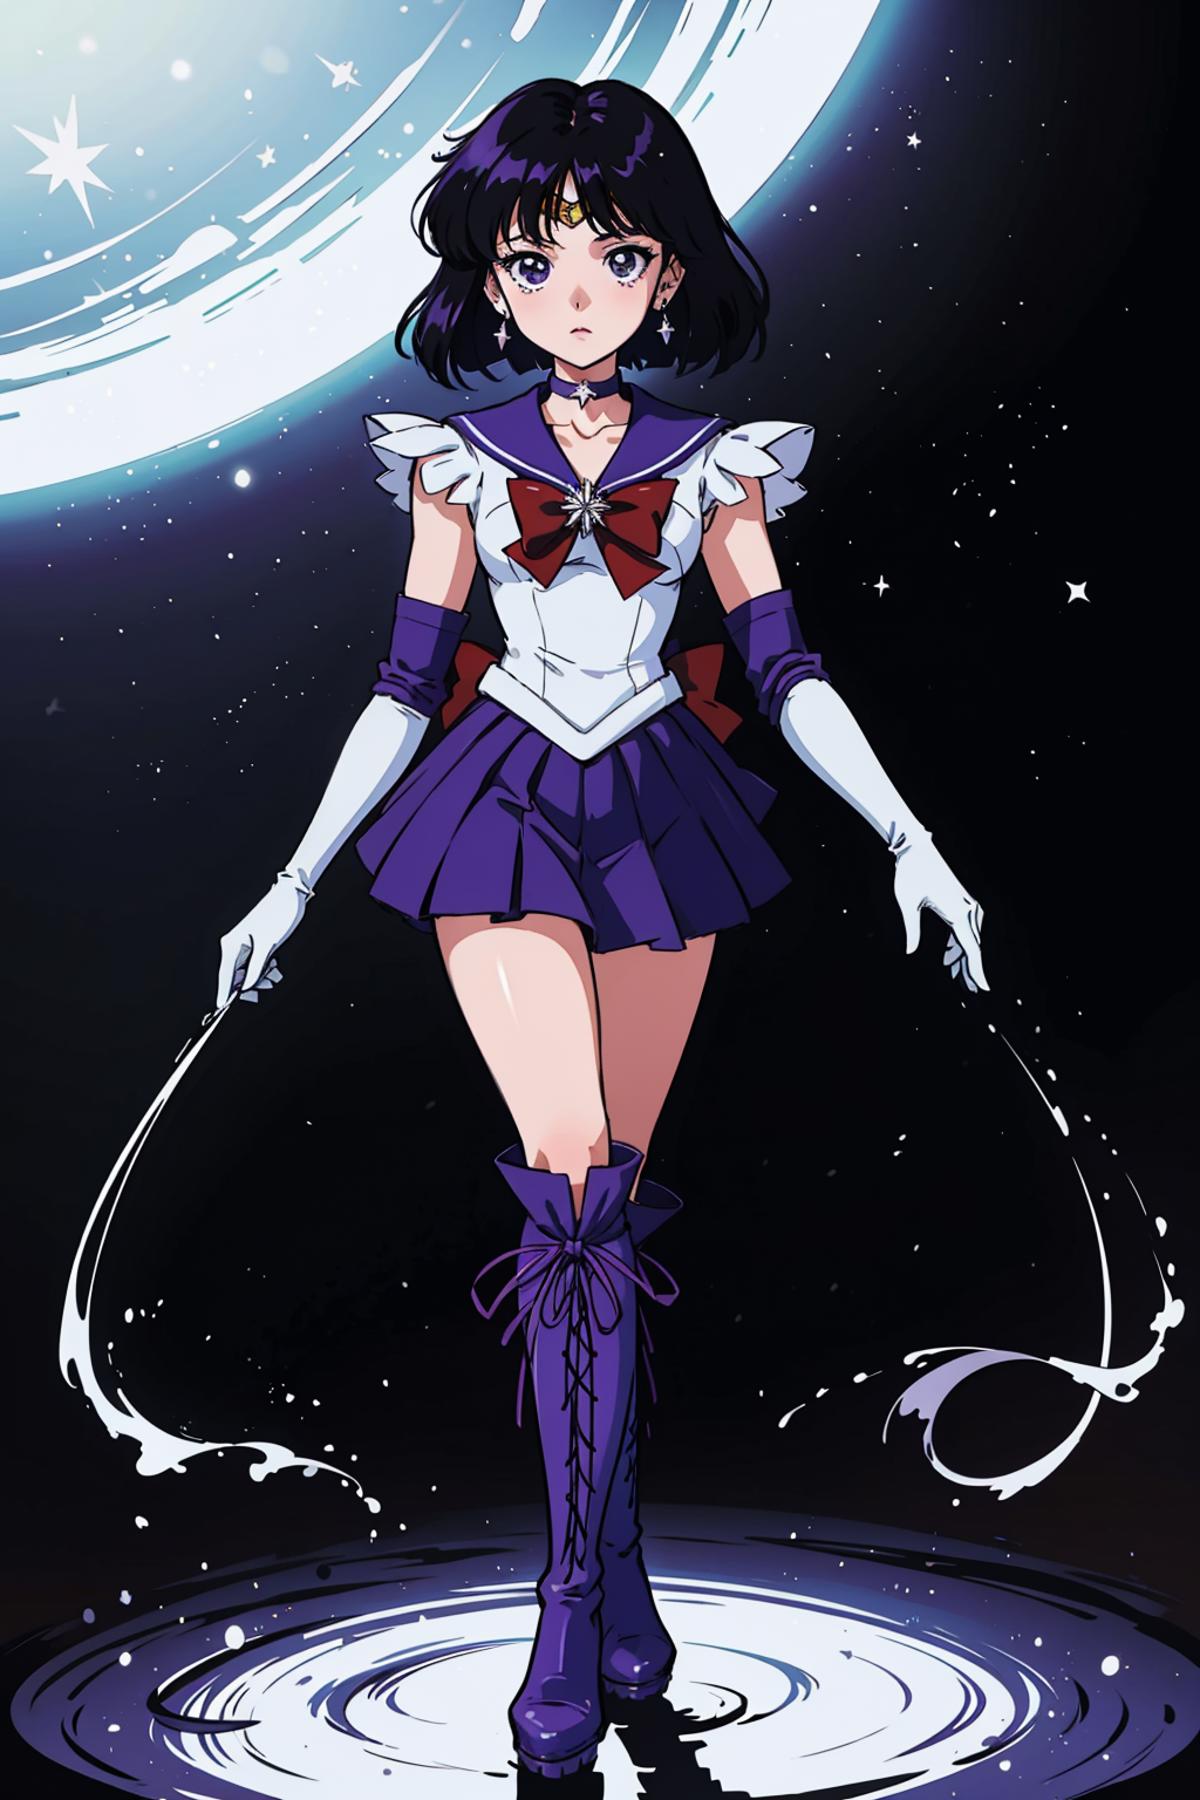 Sailor Saturn / Hotaru Tomoe (Sailor Moon) - Lora image by ElizaPottinger